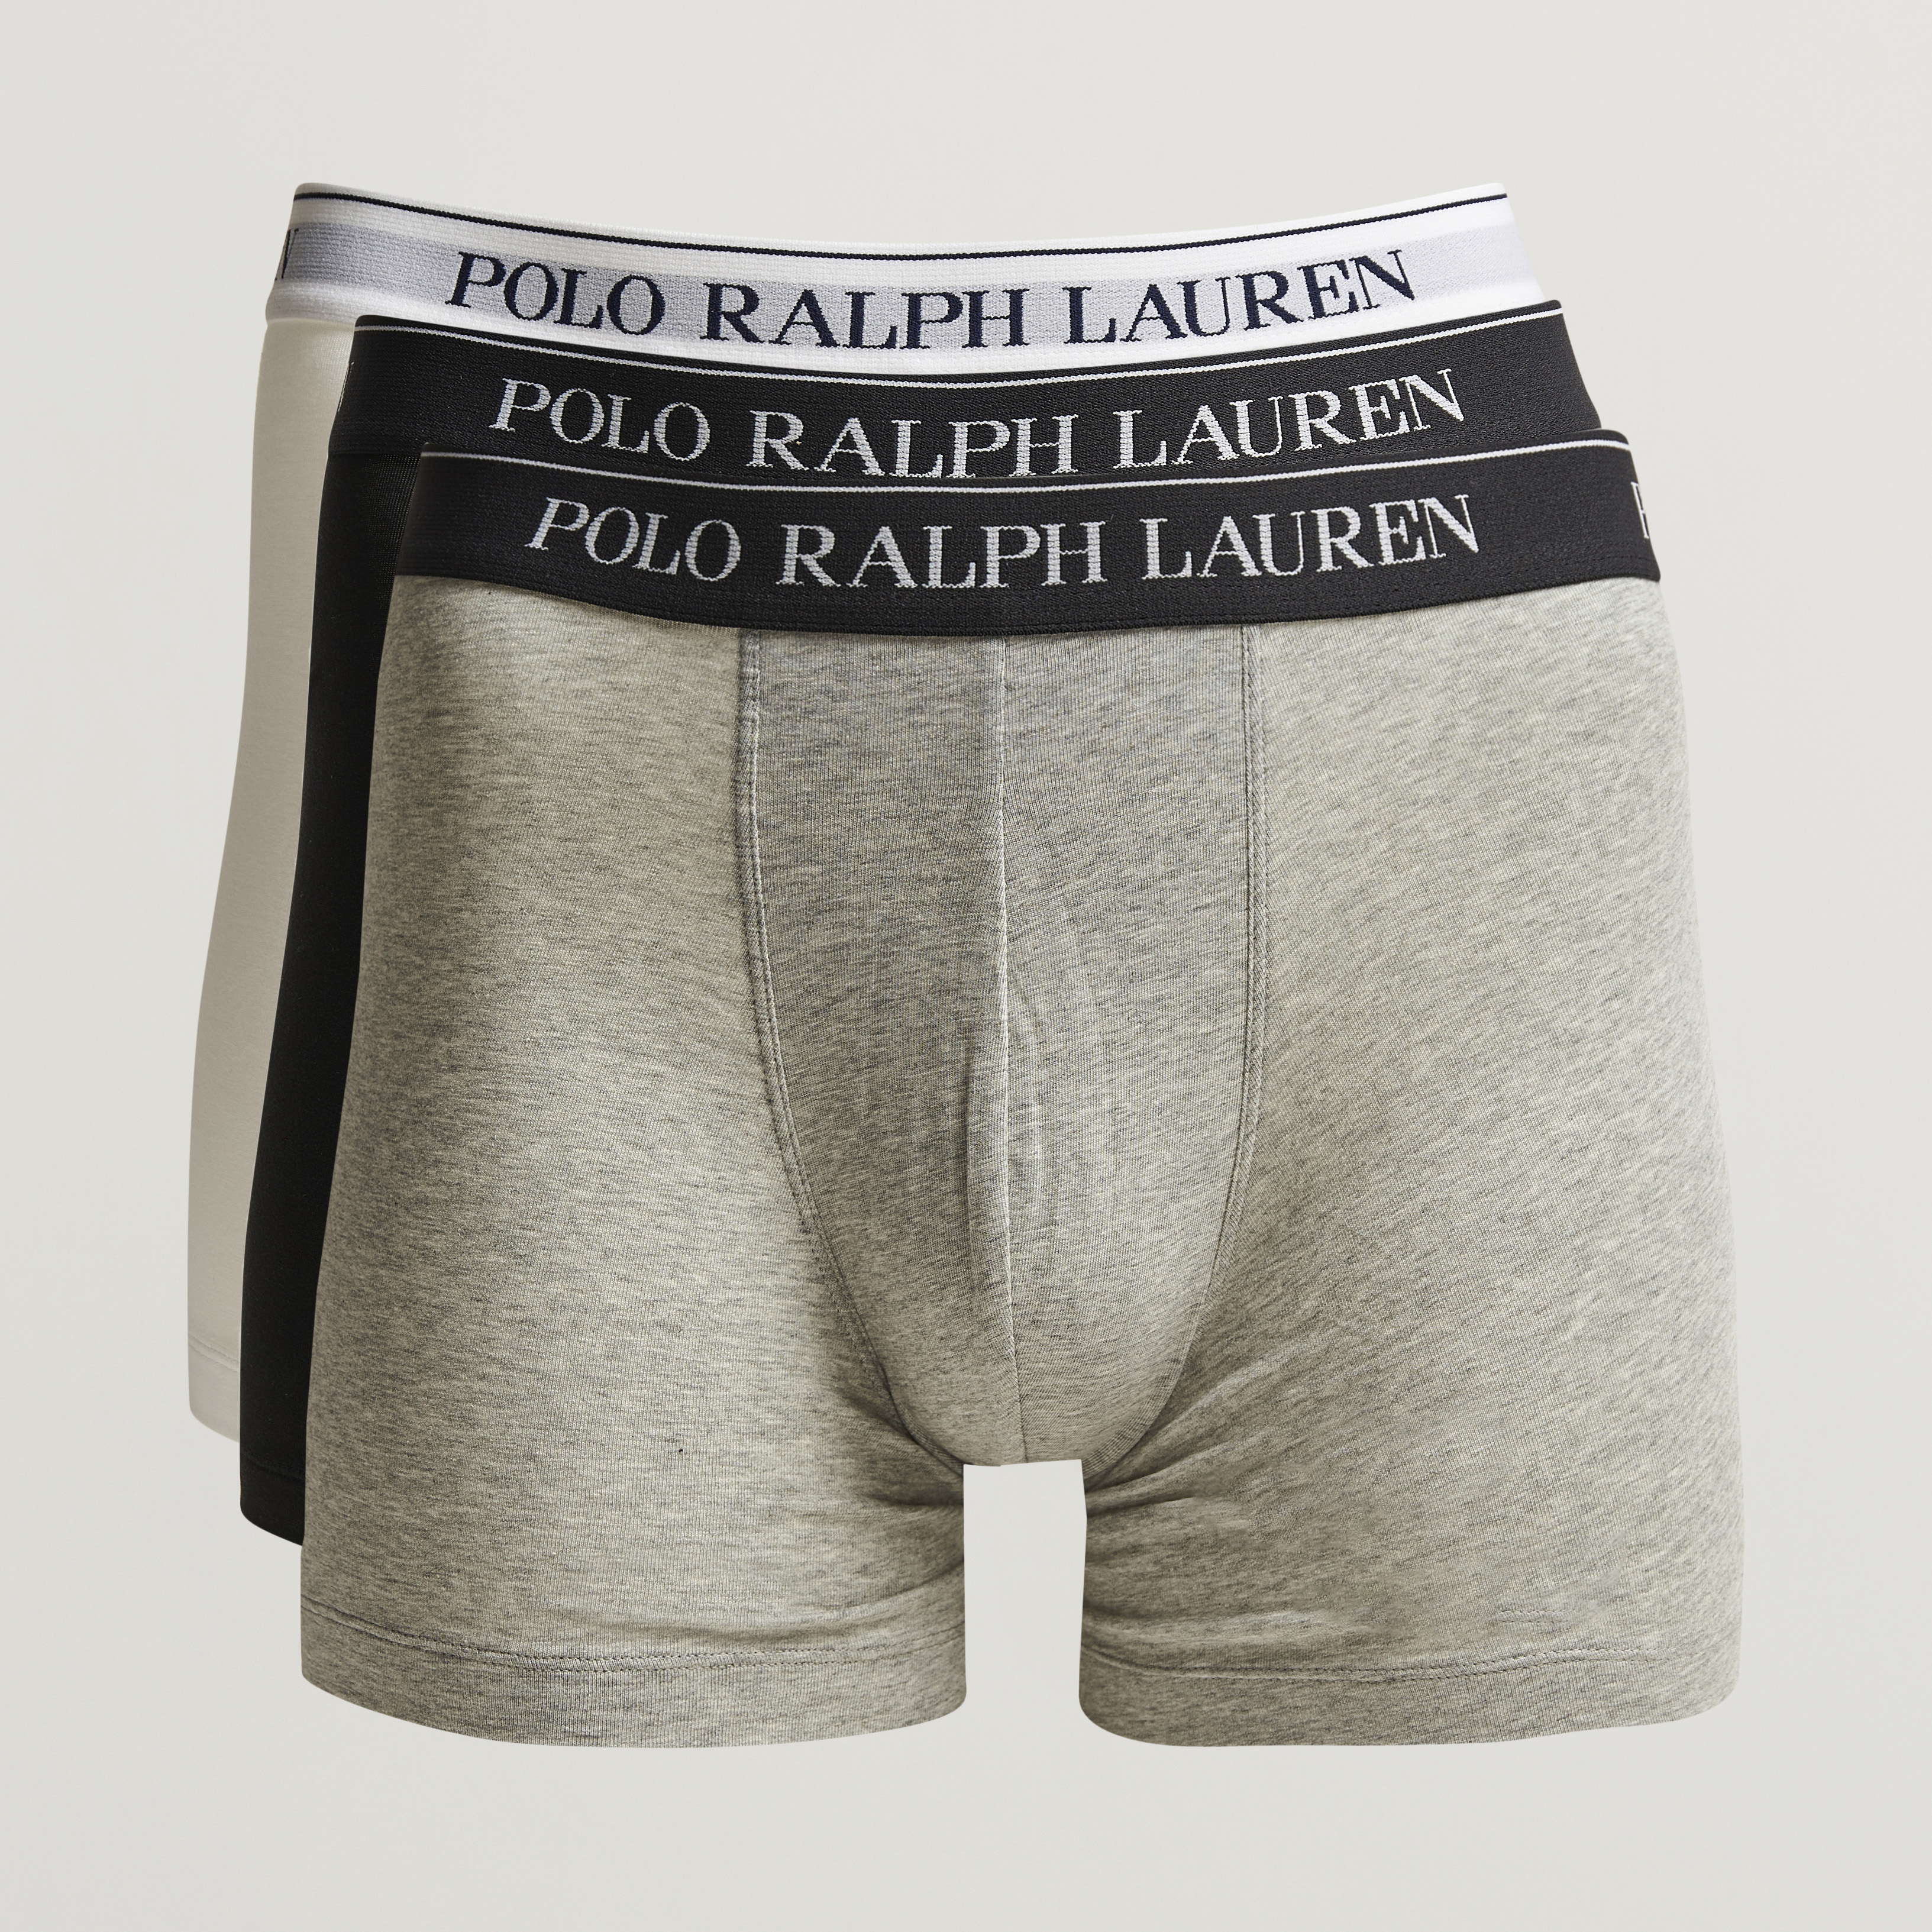 POLO RALPH LAUREN 3-pack boxer shorts in dark blue/ blue/ beige